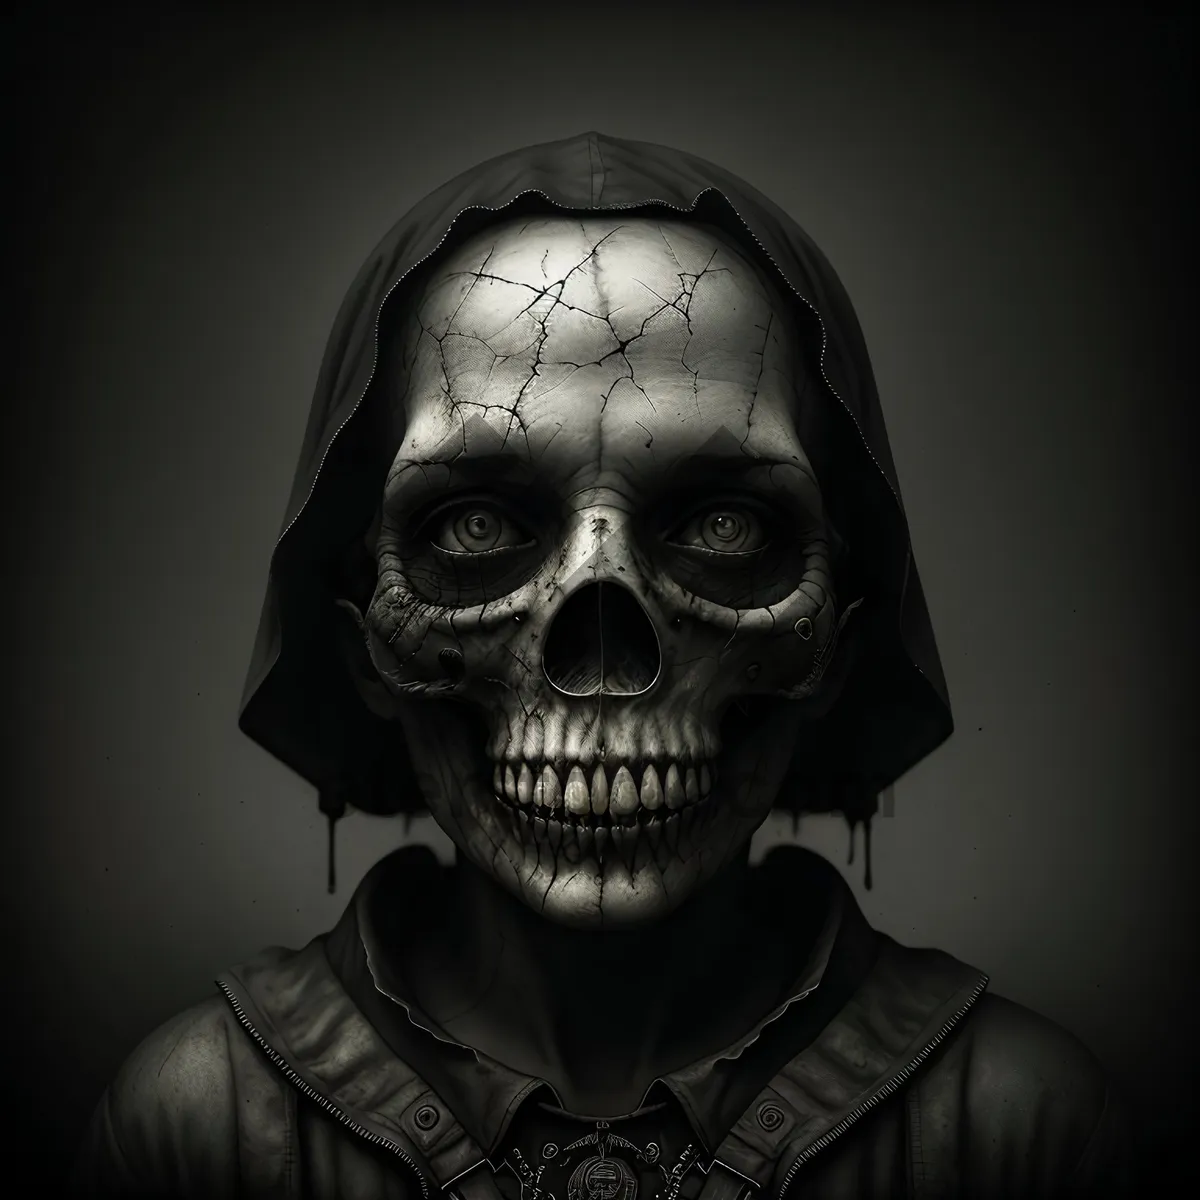 Picture of Terrifying Skull Mask for Halloween Costume